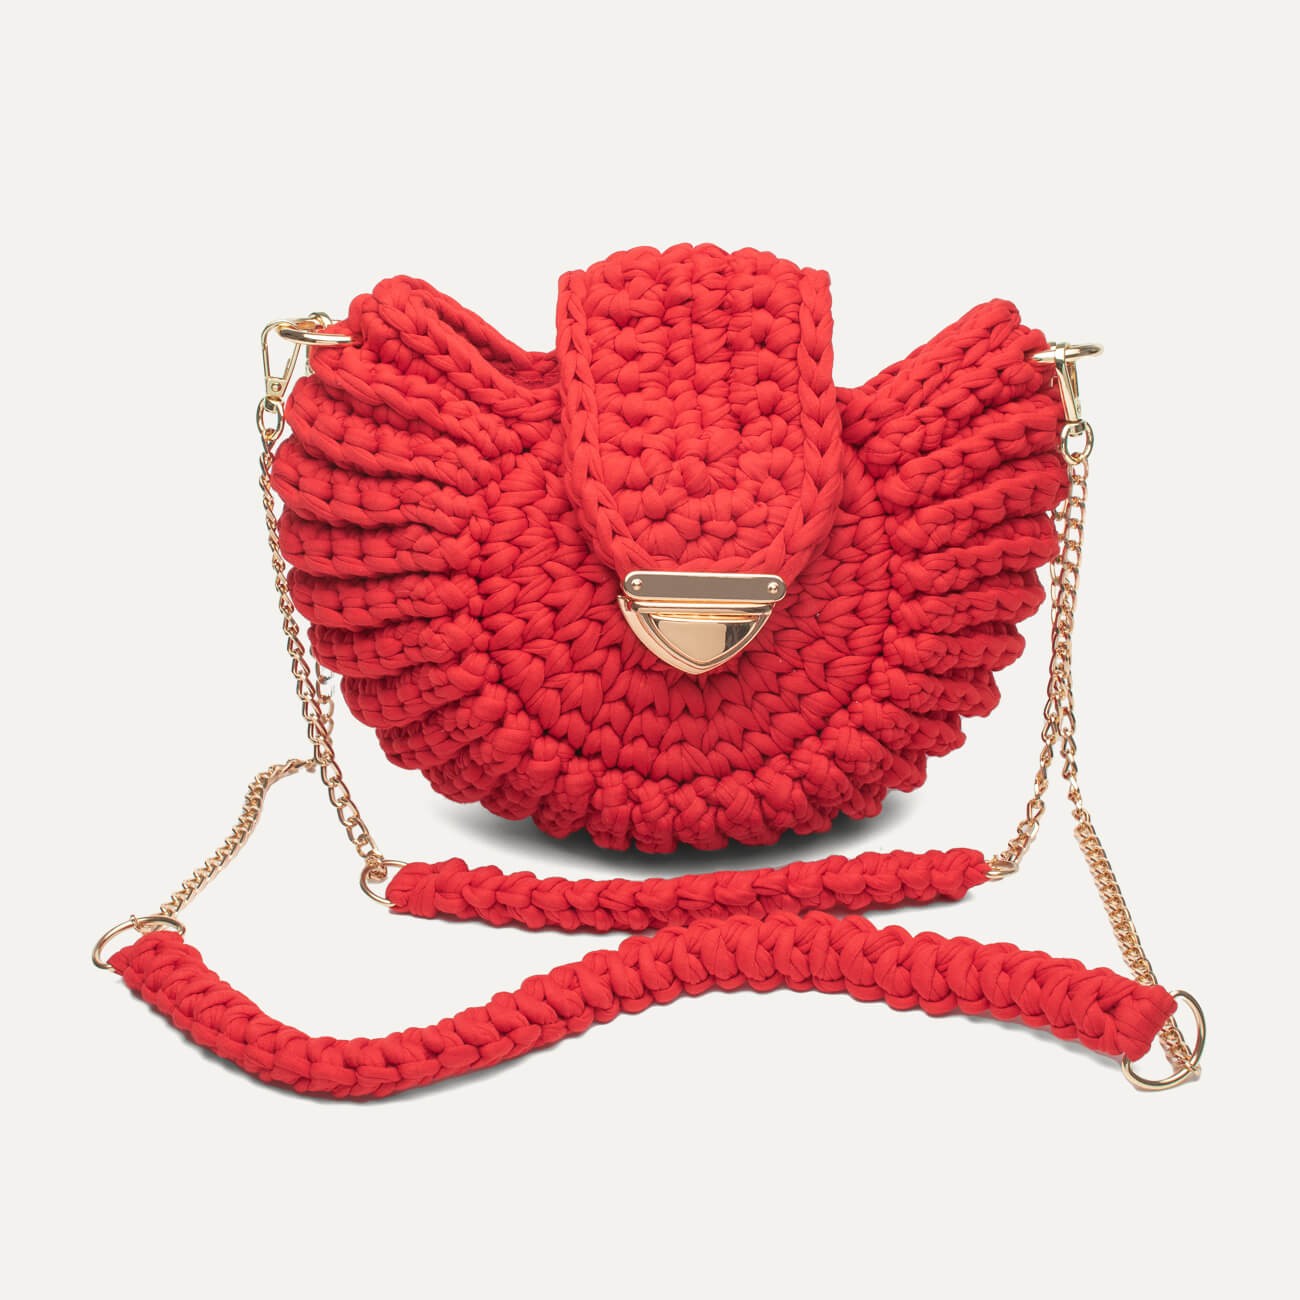 Red women bag